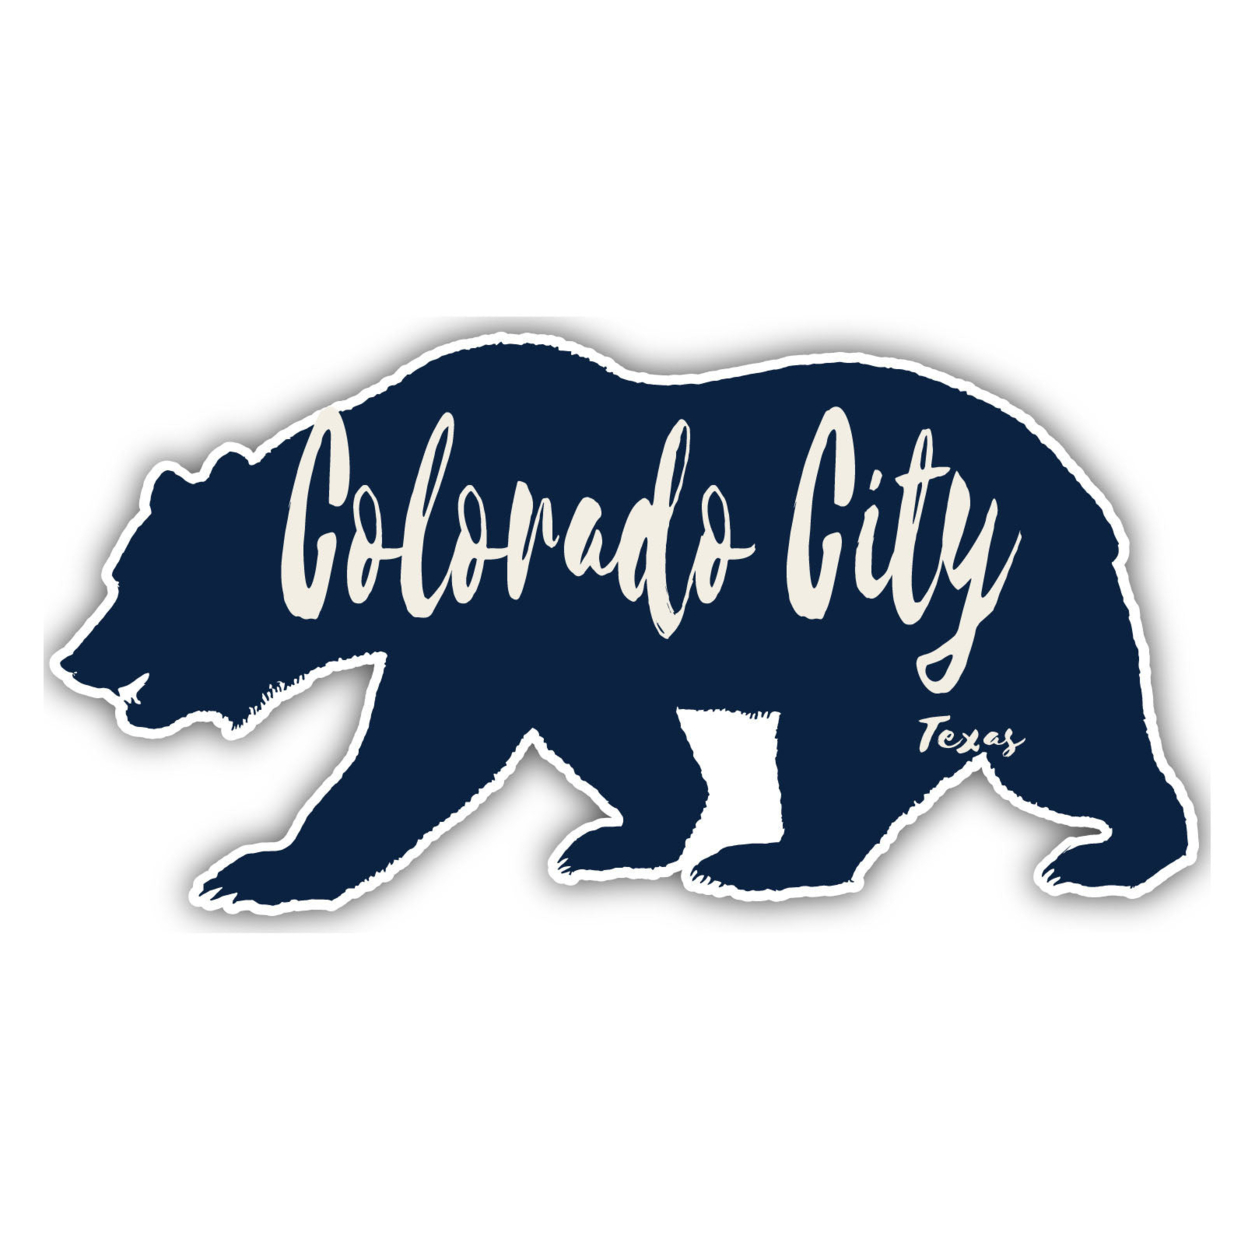 Colorado City Texas Souvenir Decorative Stickers (Choose Theme And Size) - Single Unit, 6-Inch, Bear